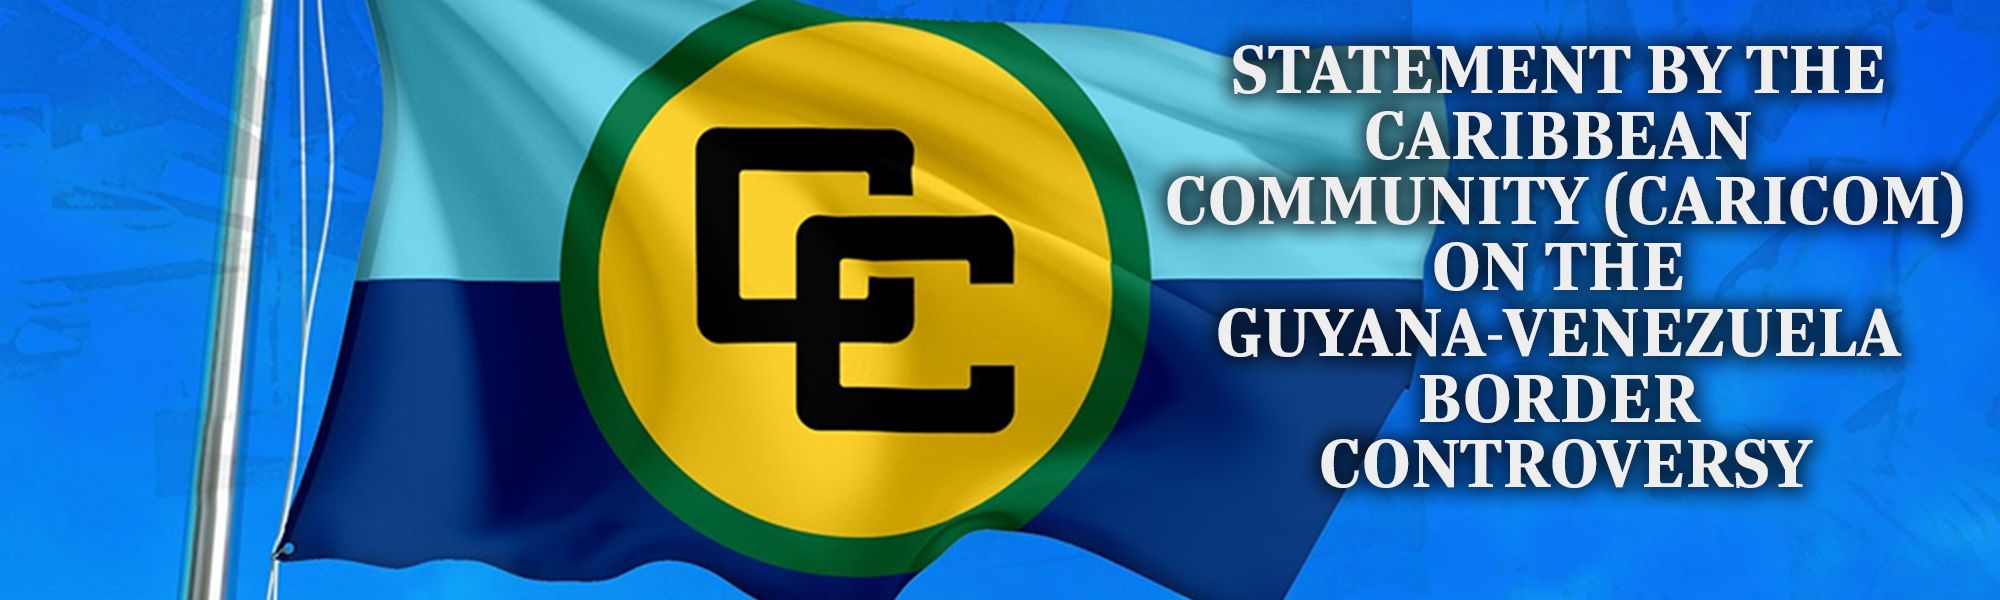 Statement by the Caribbean Community (CARICOM) on the Guyana-Venezuela Border Controversy